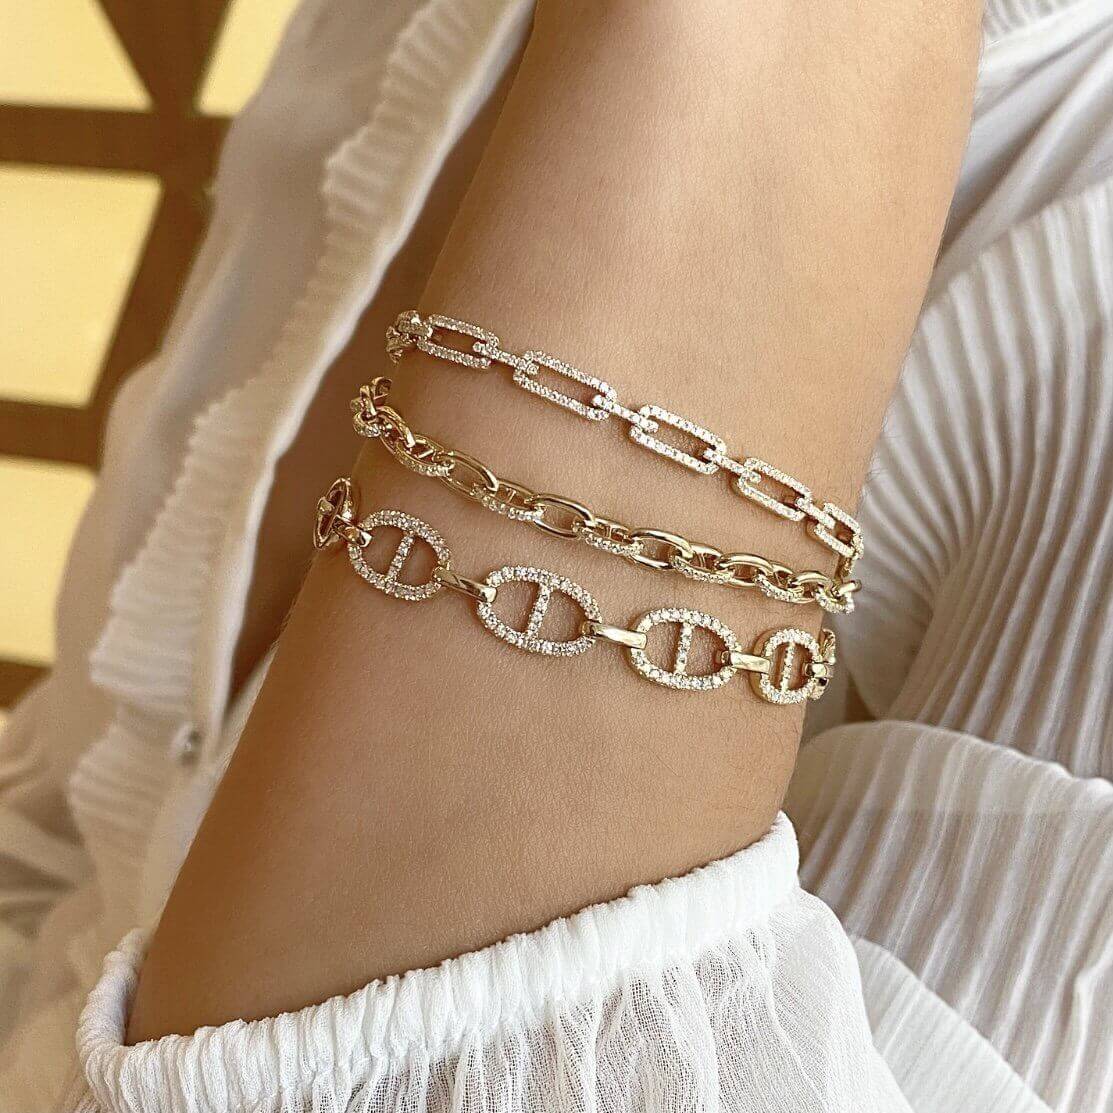 Puffed Mariner Chain Bracelet